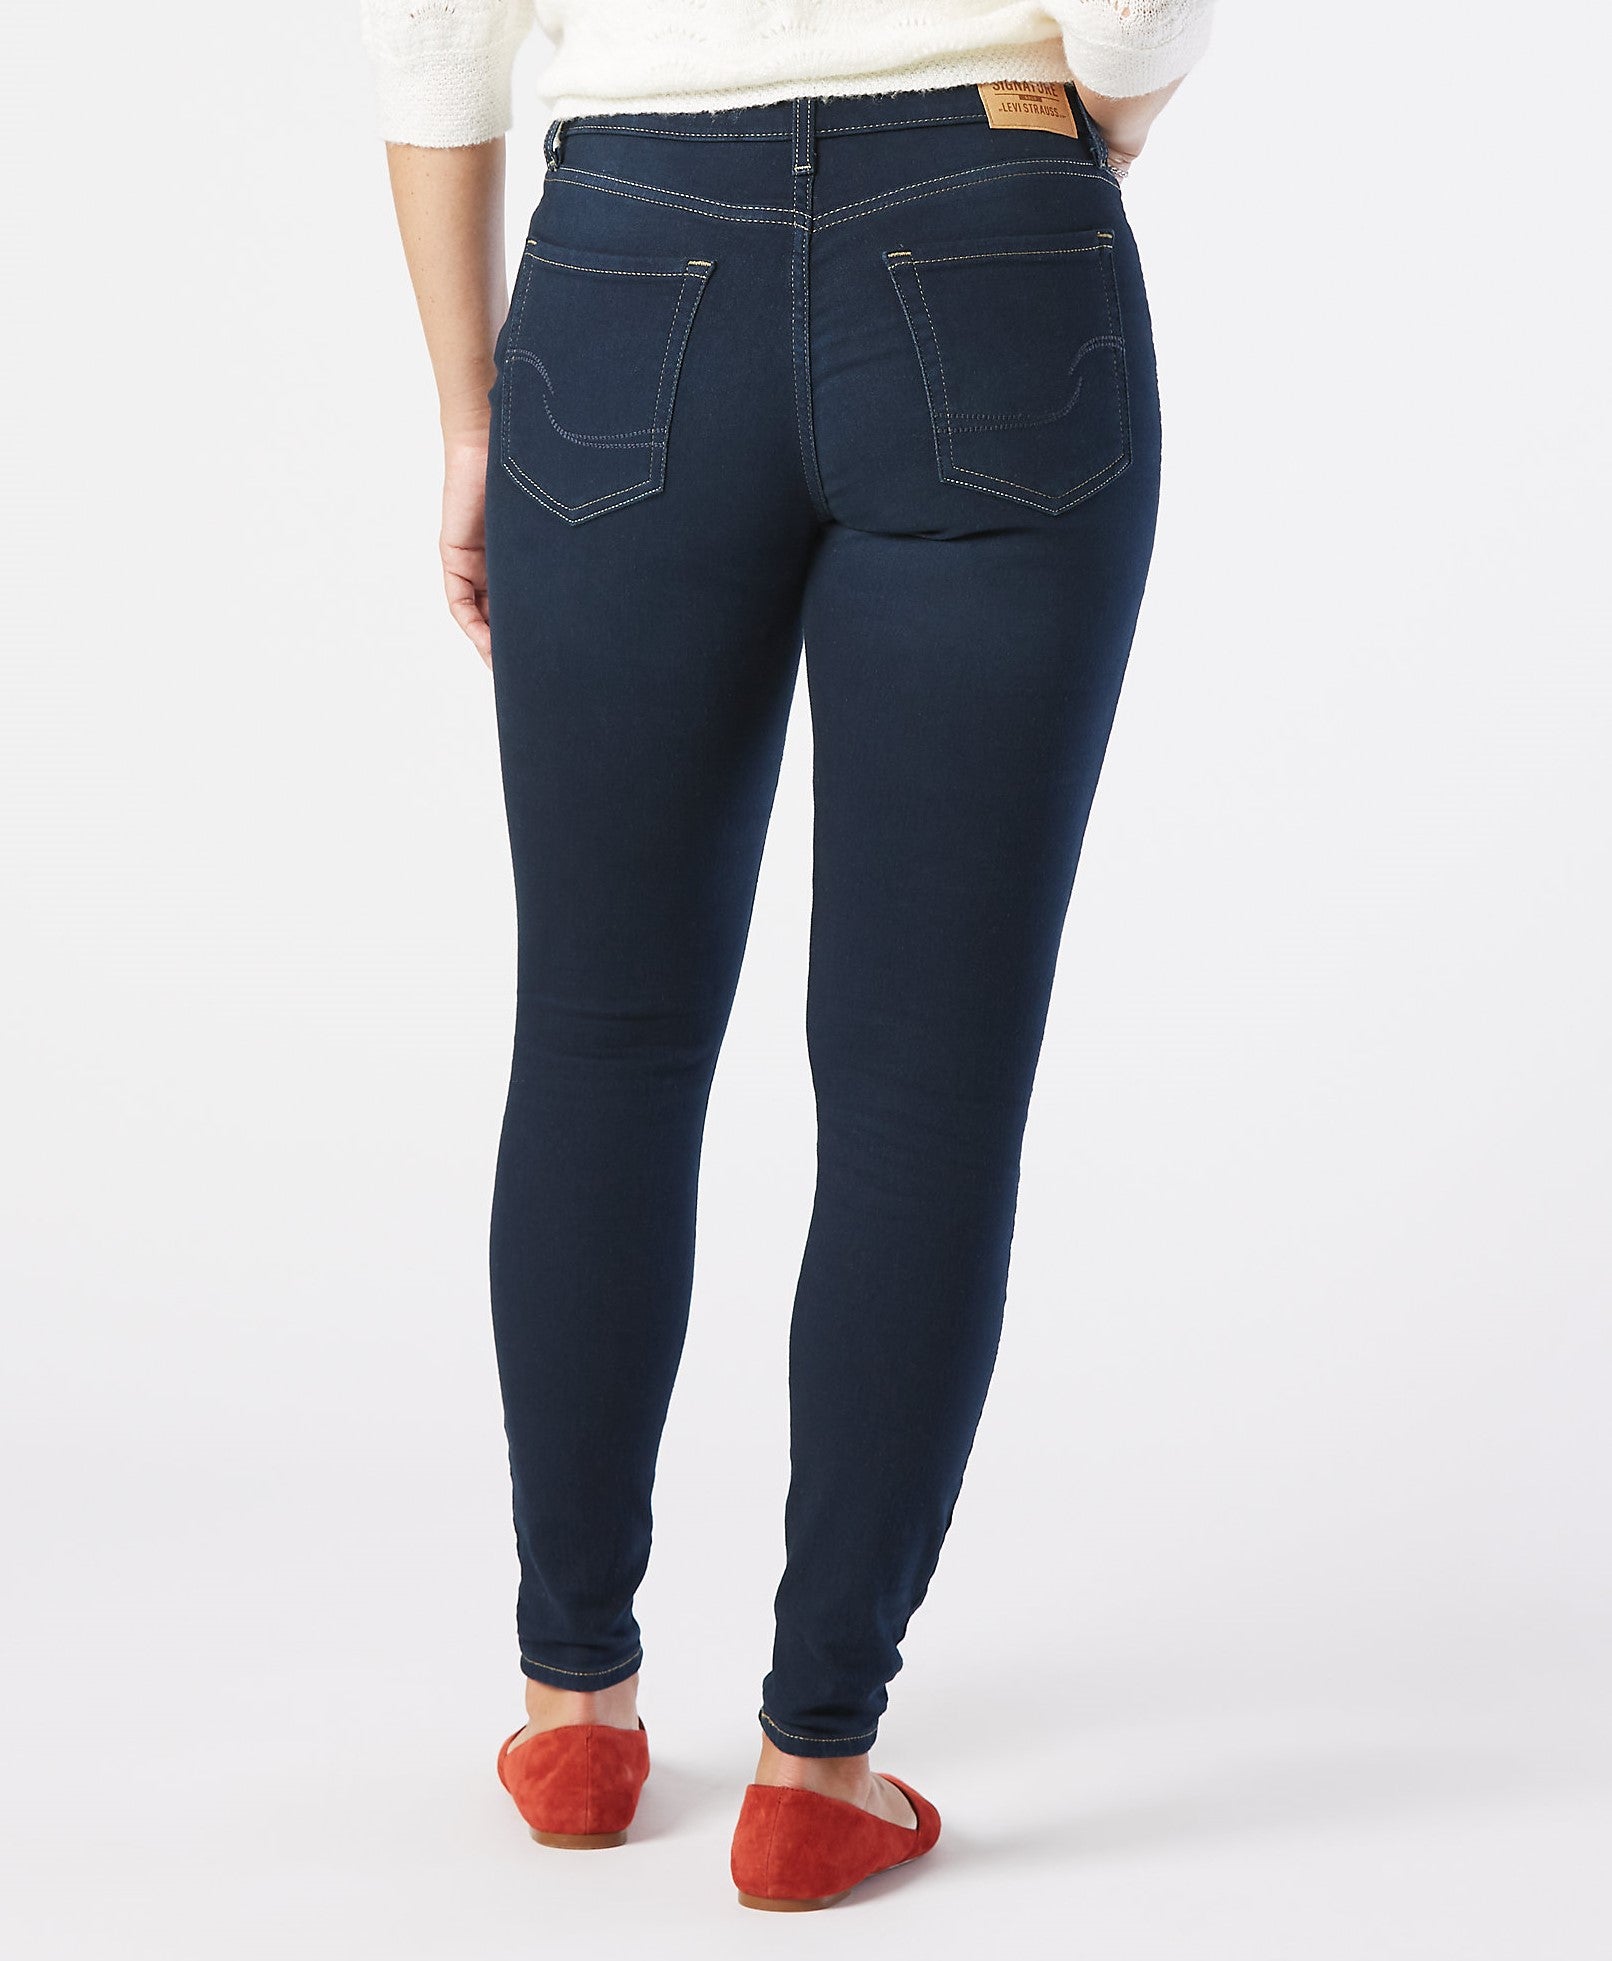 pantalones-jeans-levis-skinny-p-damas